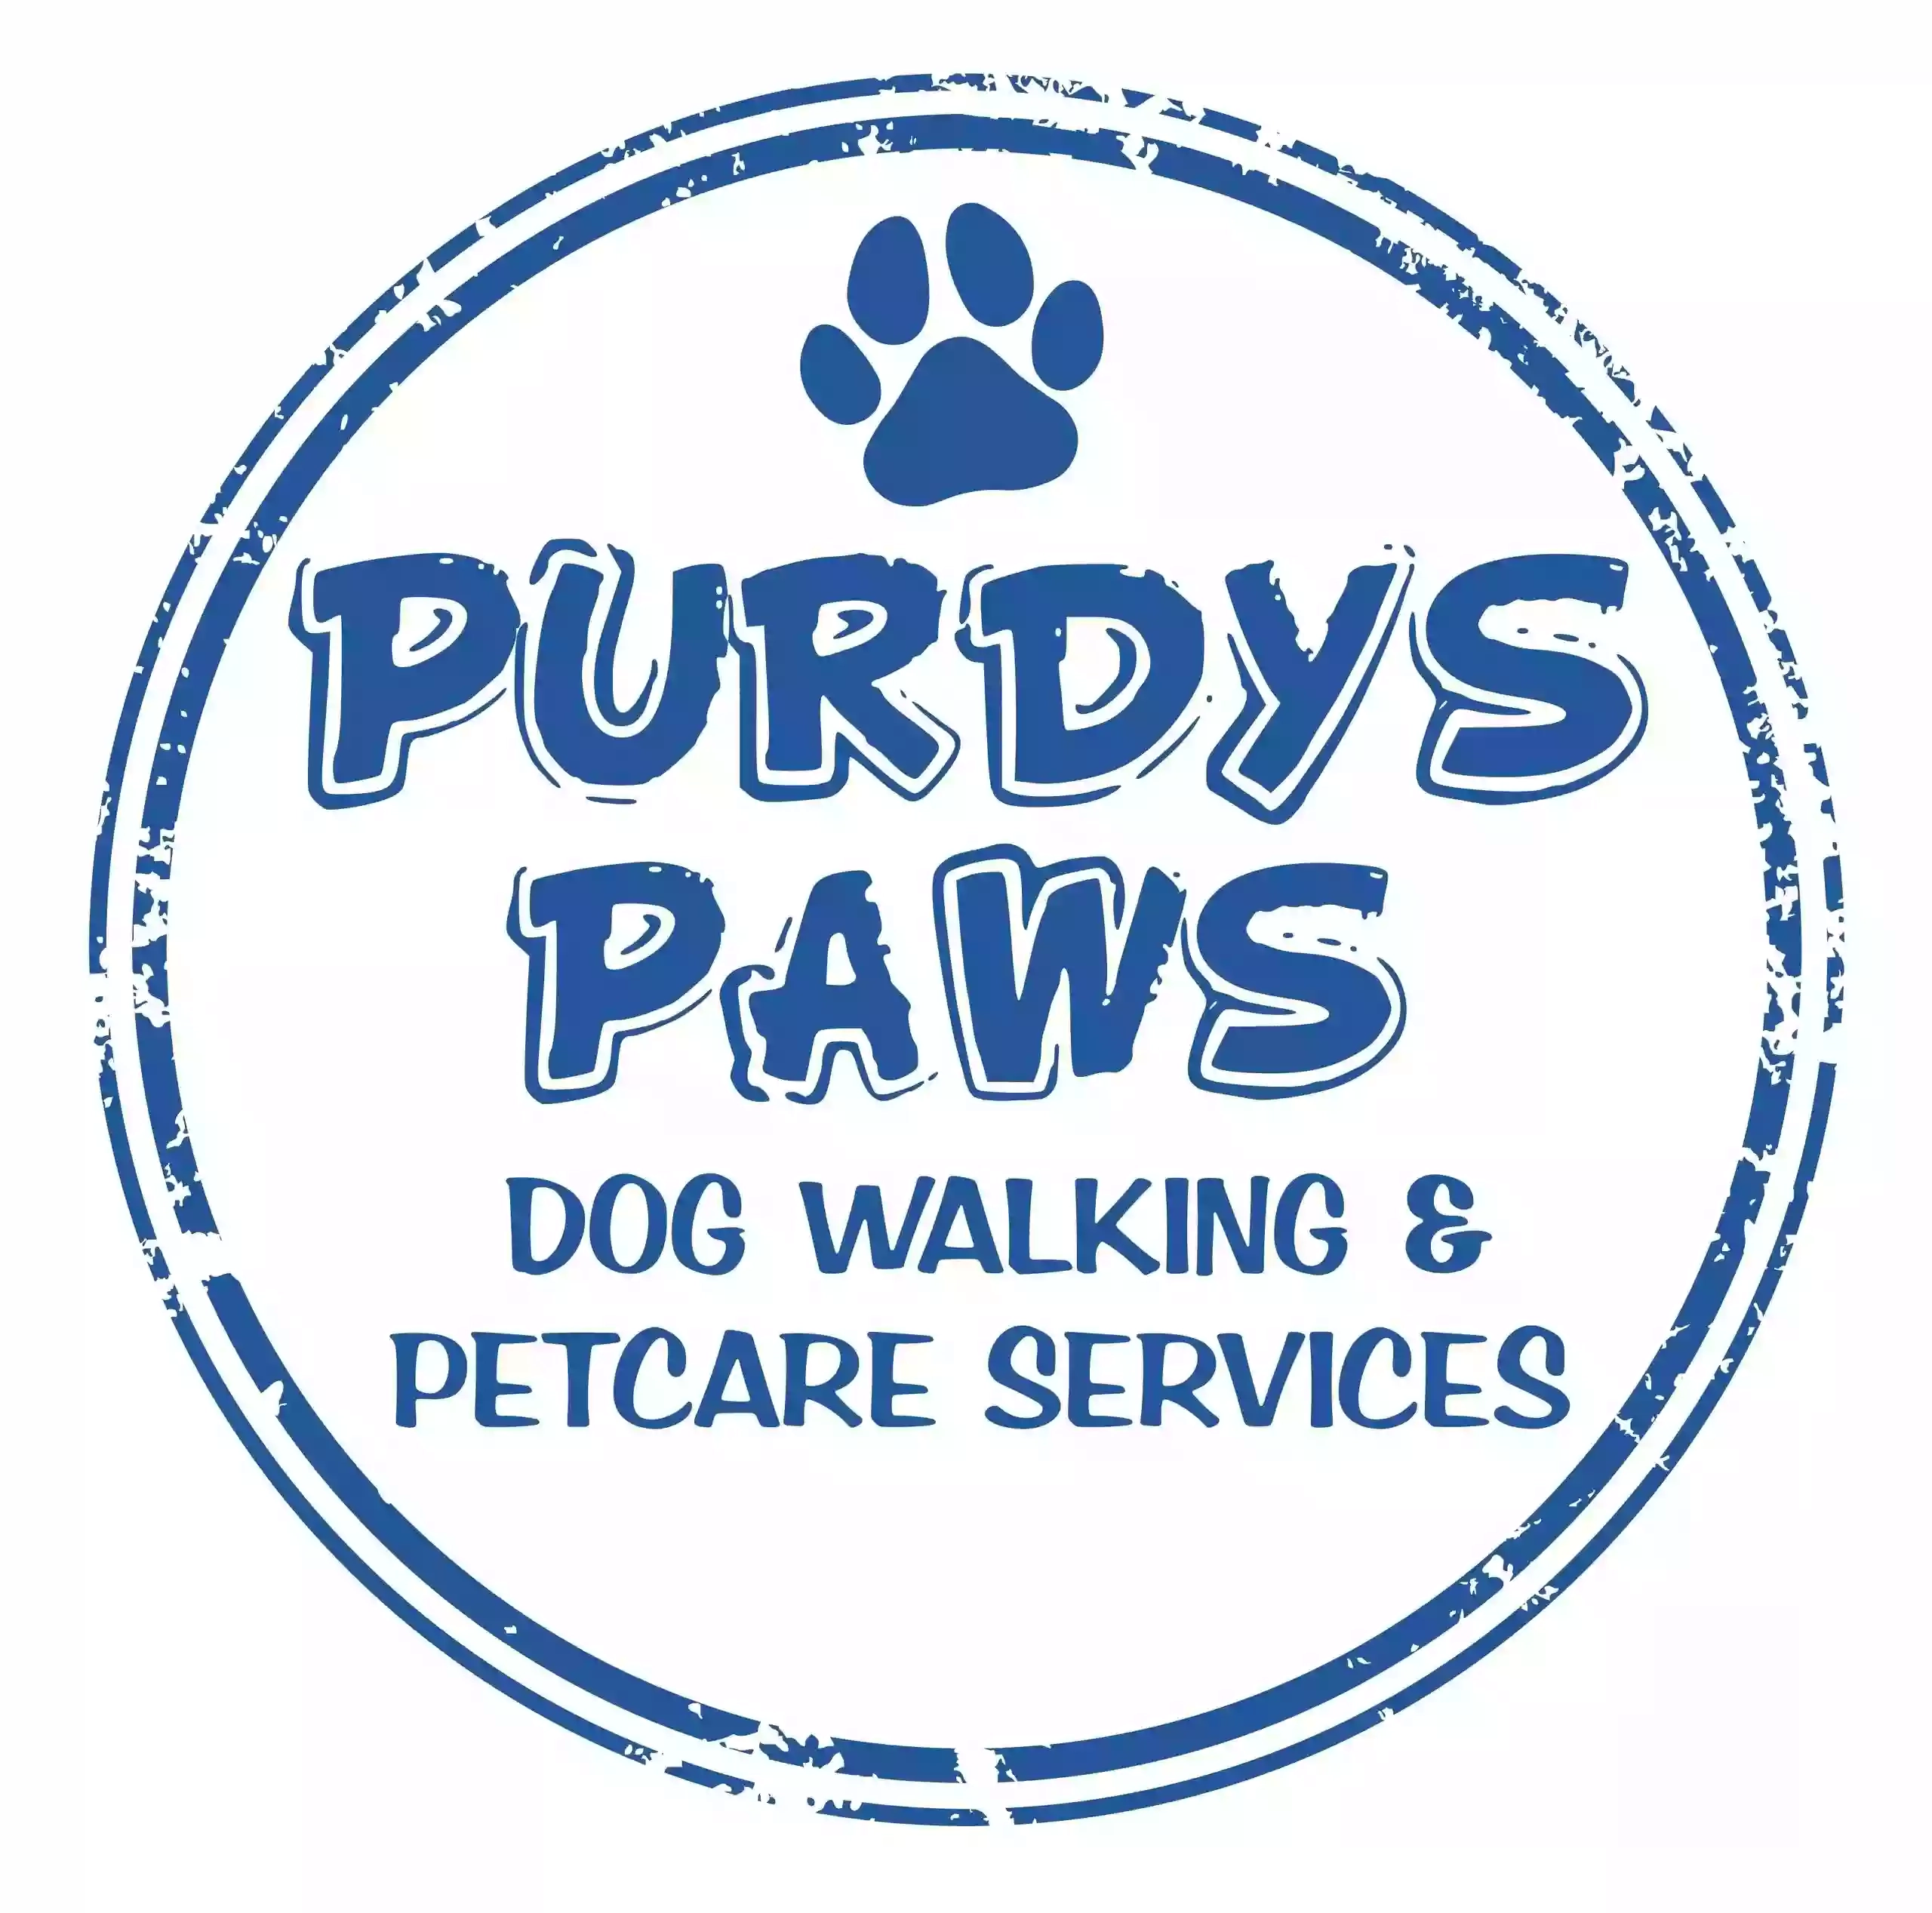 Purdys Paws Pet Care Services